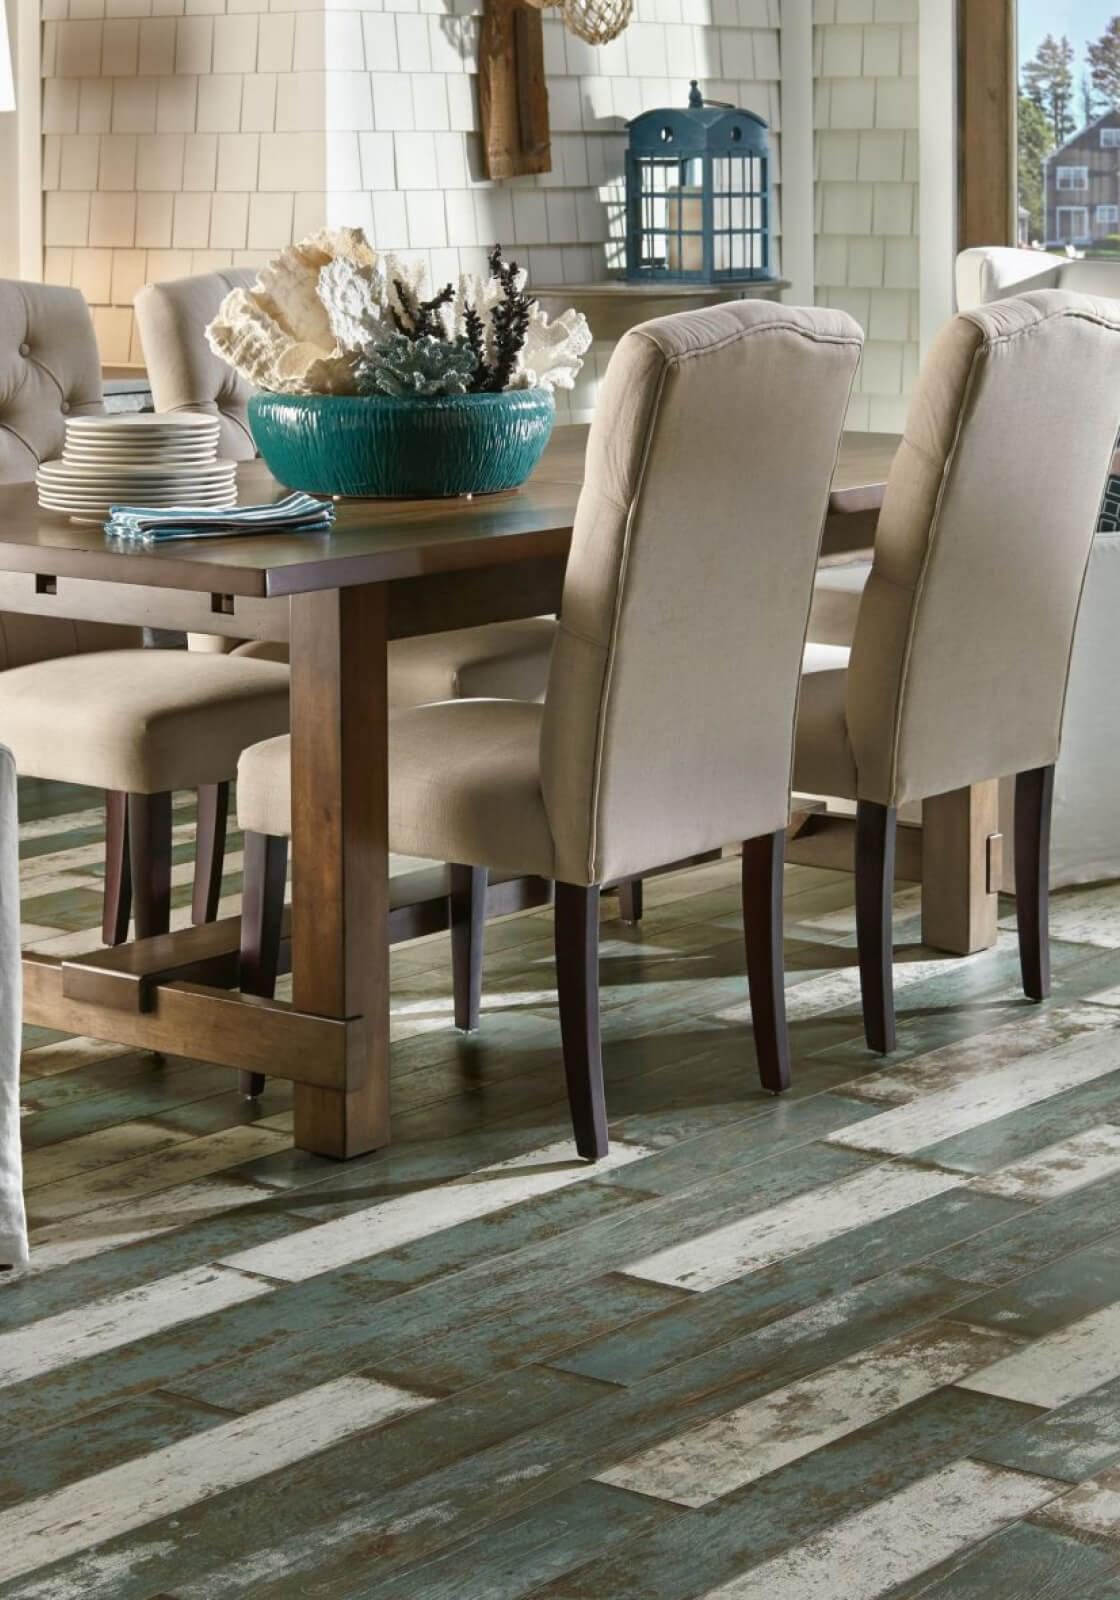 Laminate floors in dining room | Carpetland USA